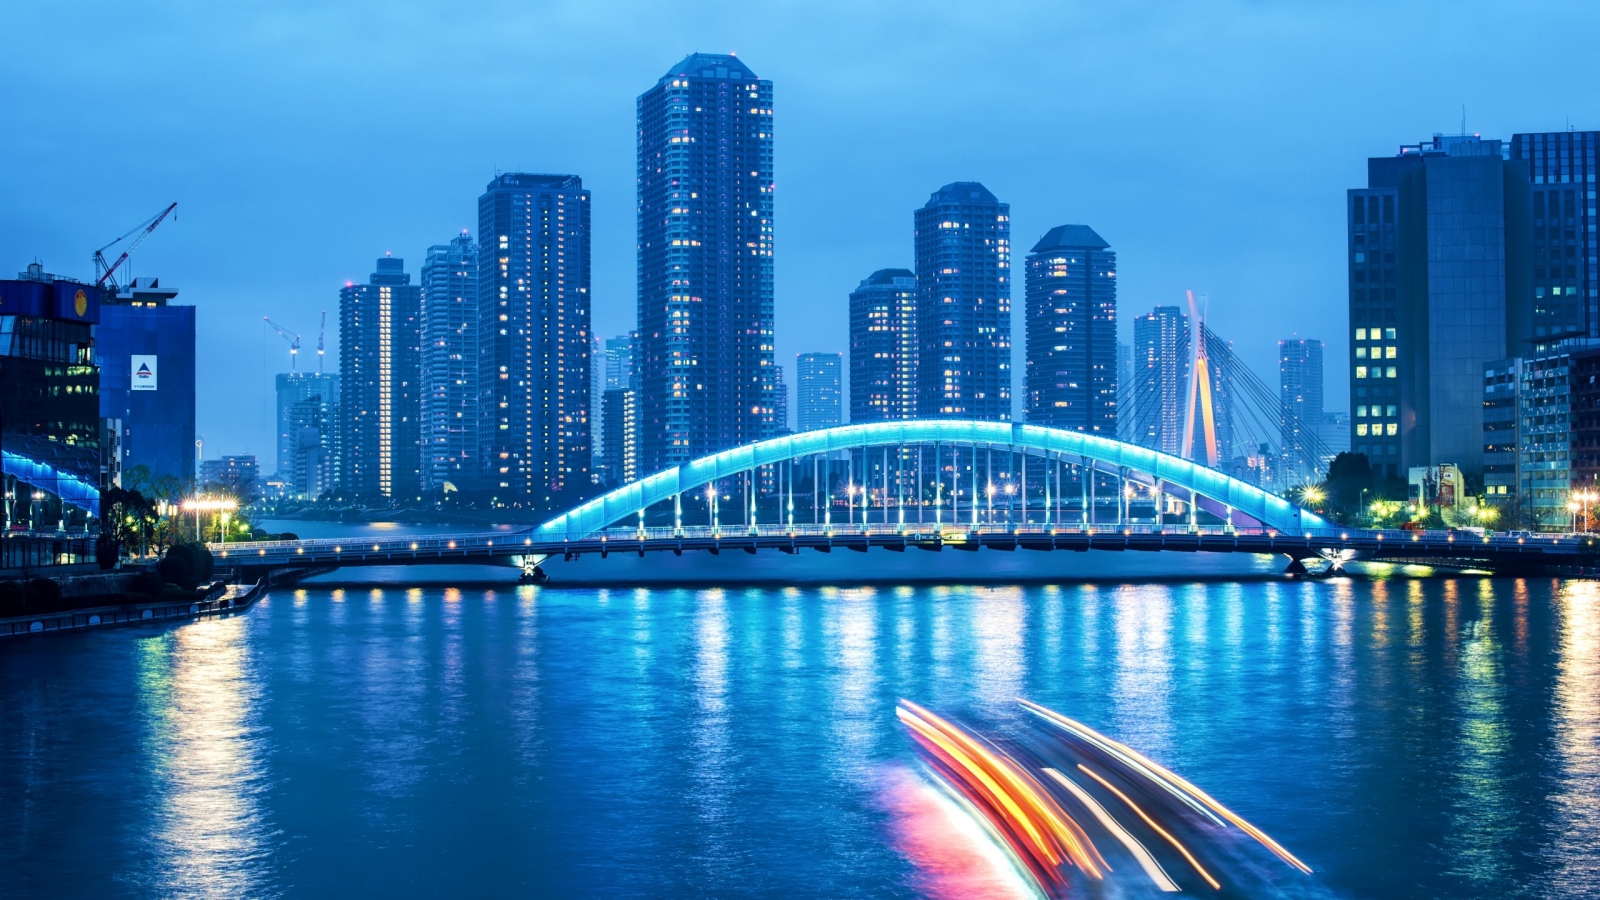 Tokyo Night Bridge Landscape for 1600 x 900 HDTV resolution